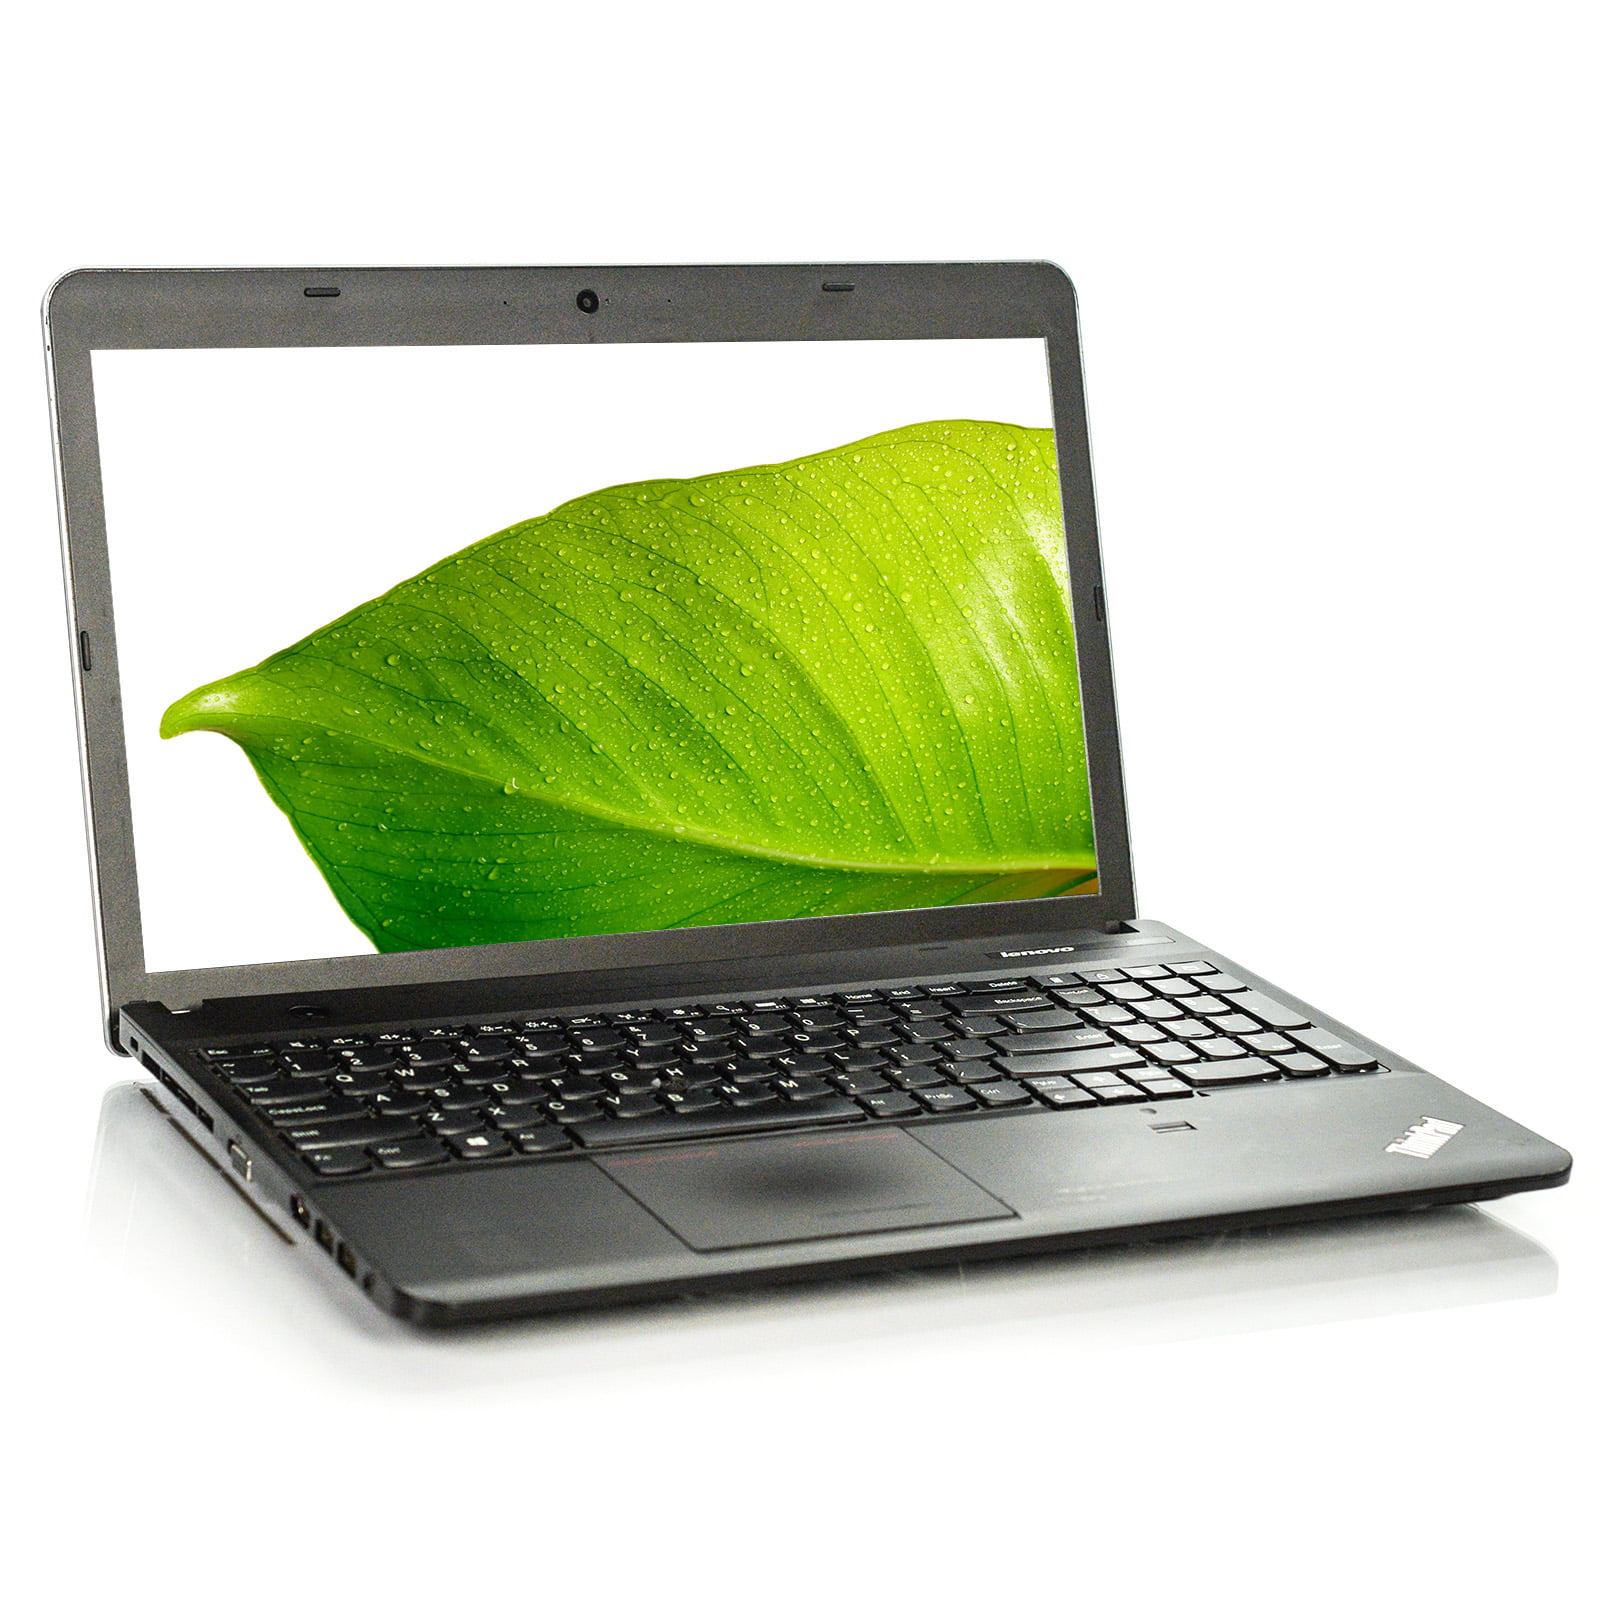 Refurbished Lenovo Thinkpad E540 Laptop I5 Dual Core 4gb 500gb Win 10 Pro B V Waa Walmart Com Walmart Com